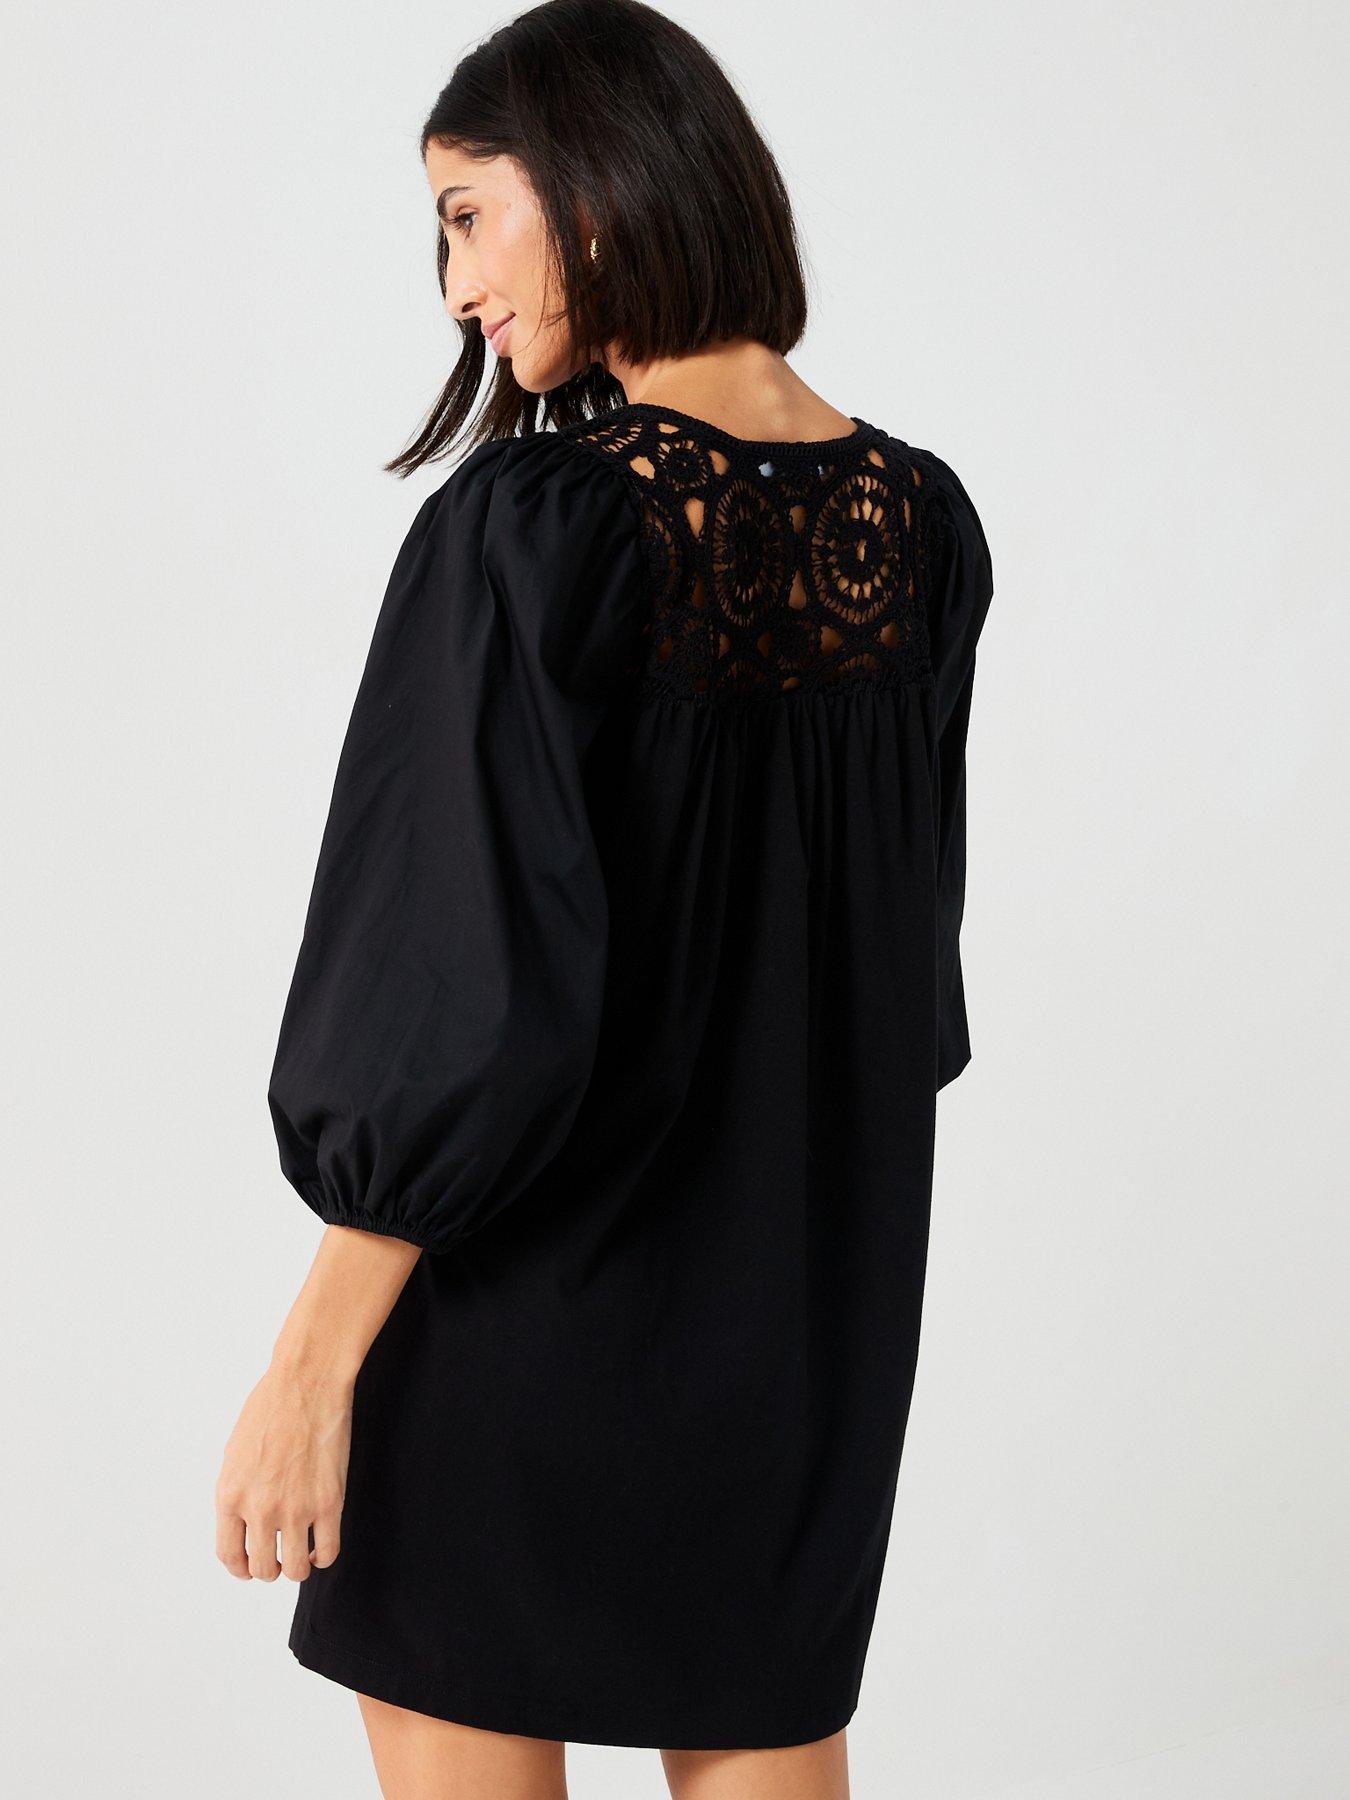 V by Very Long Sleeve Crochet Insert Mini Dress - Black | Very.co.uk